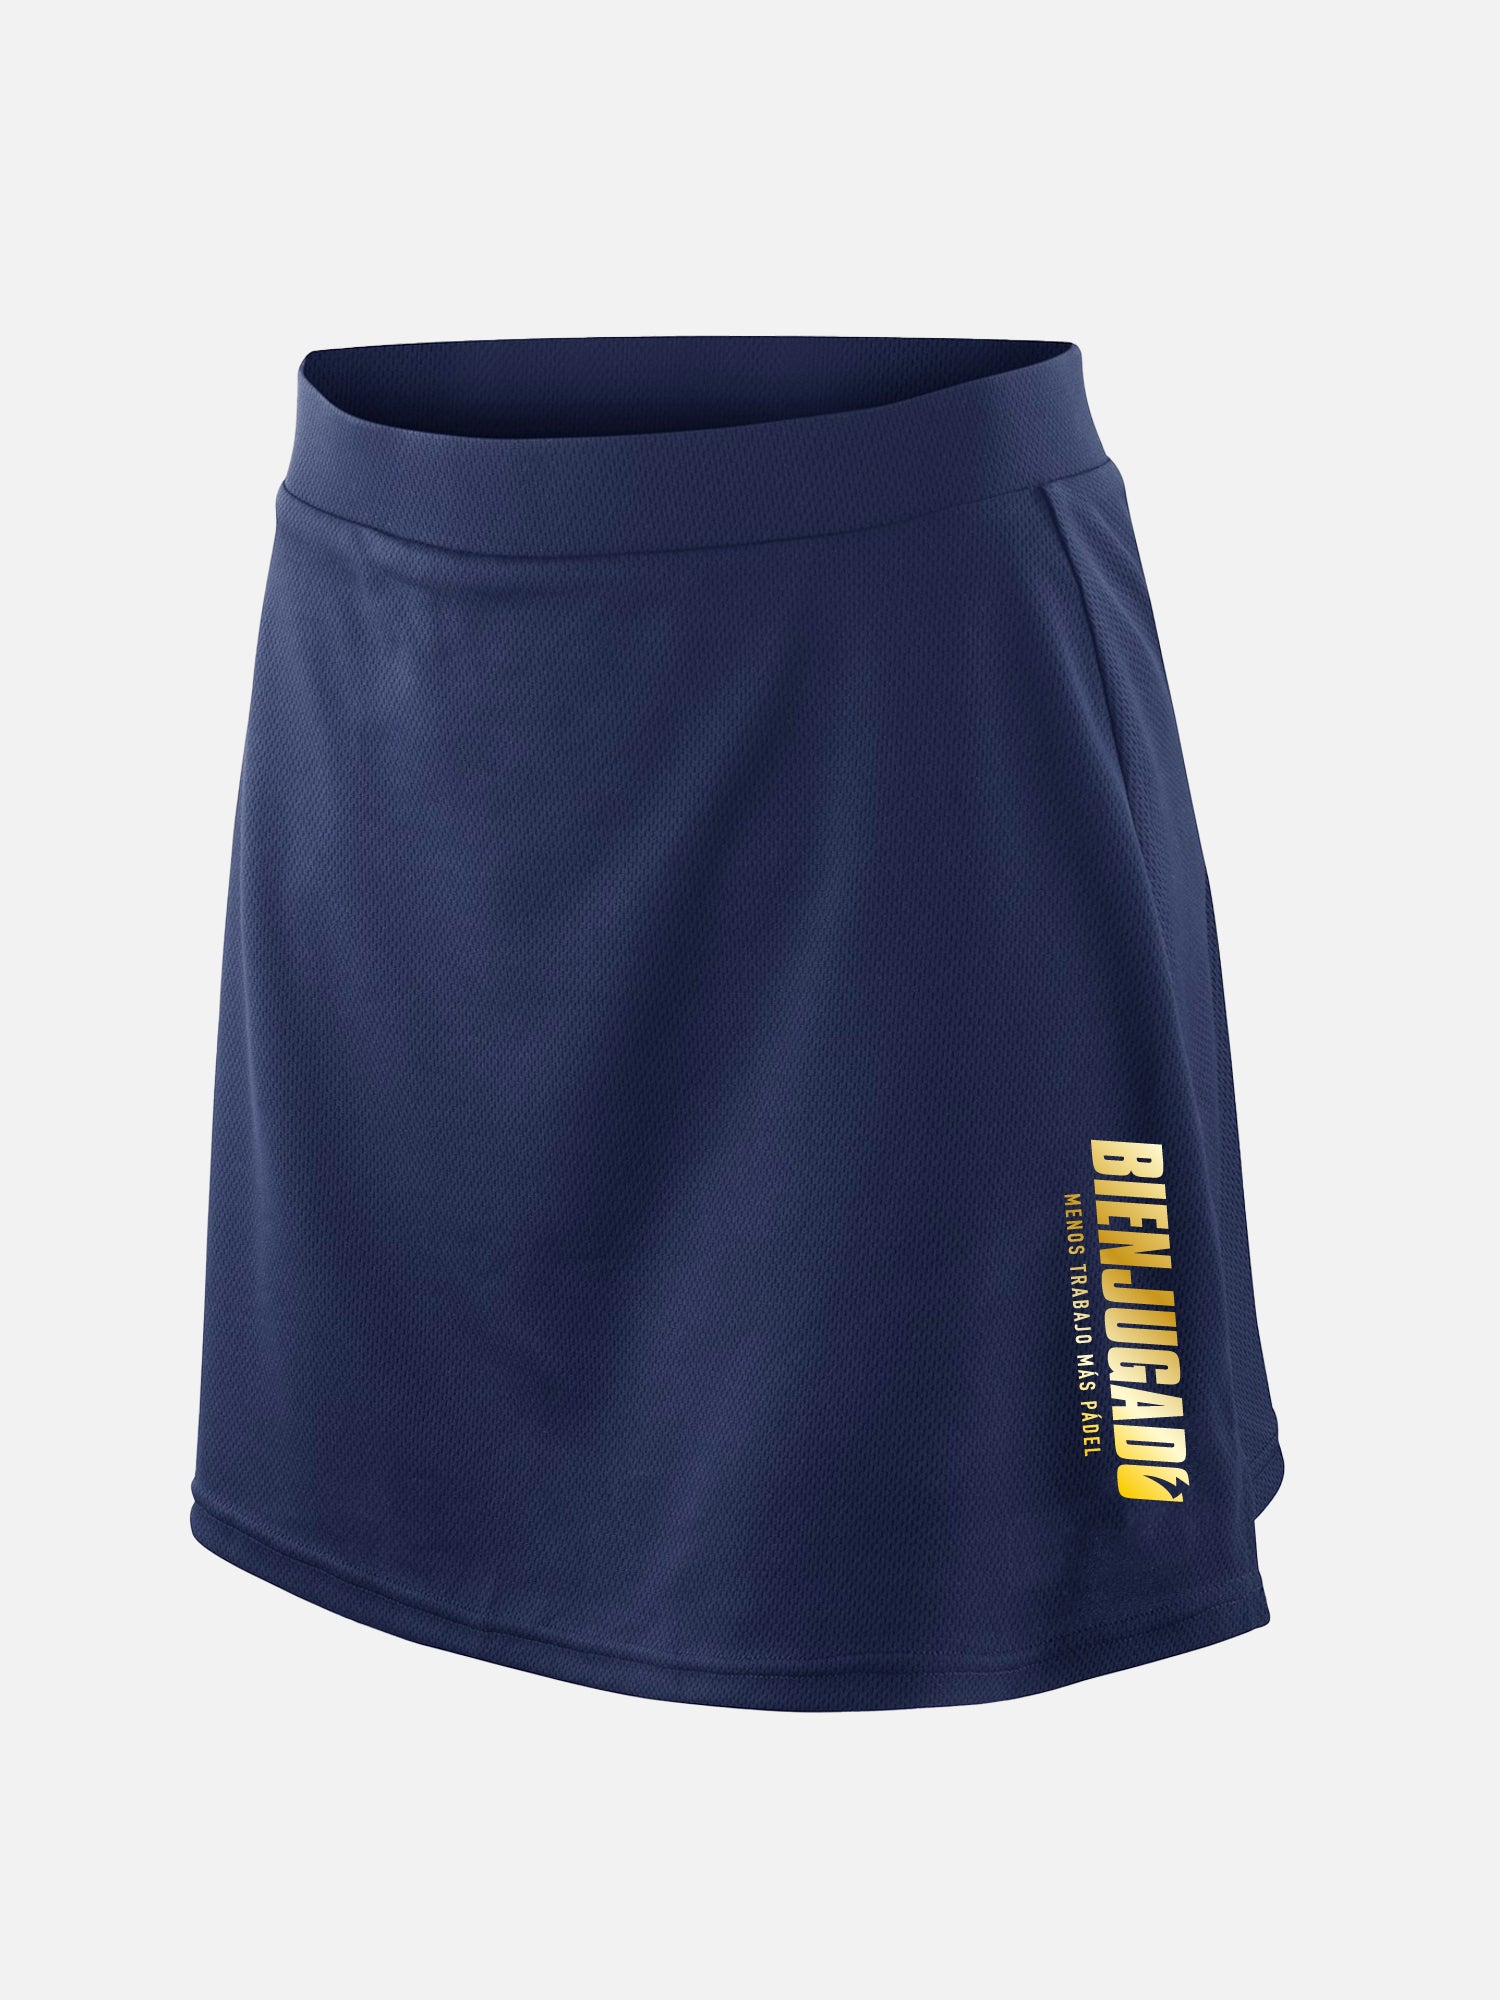 Dry Fit Skirt - Navy